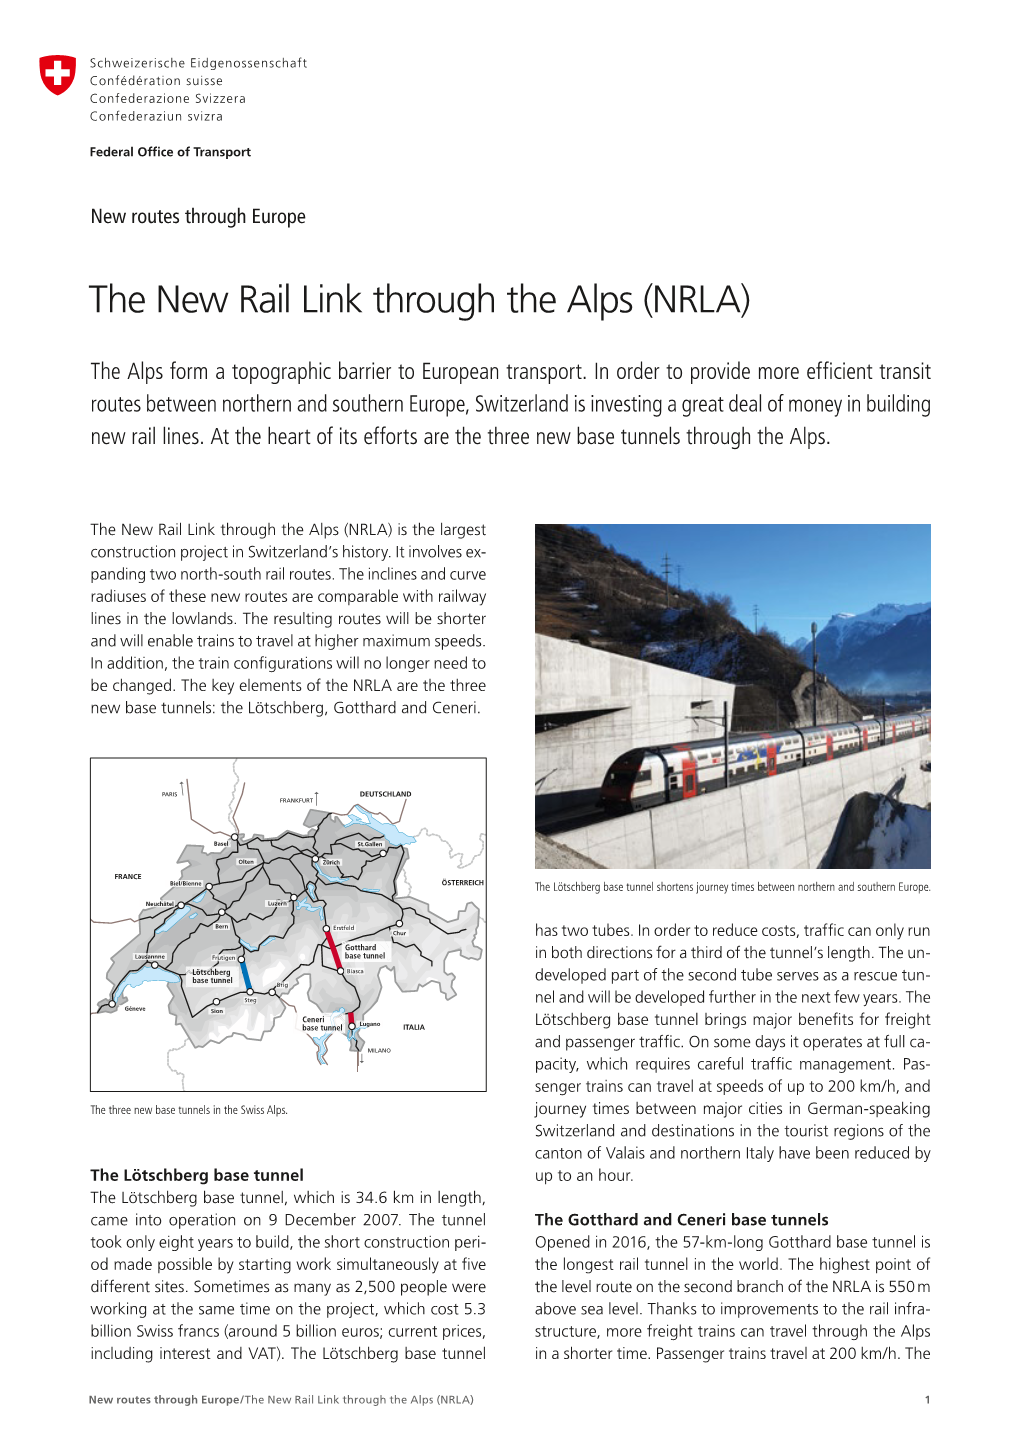 The New Rail Link Through the Alps (NRLA)